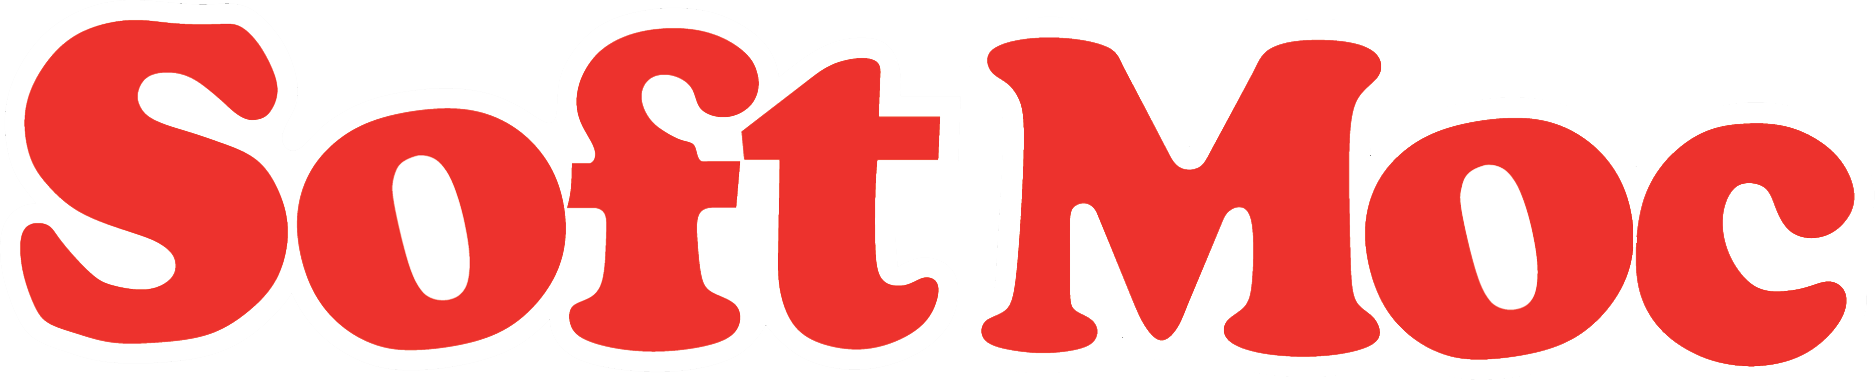 SoftMoc Logo